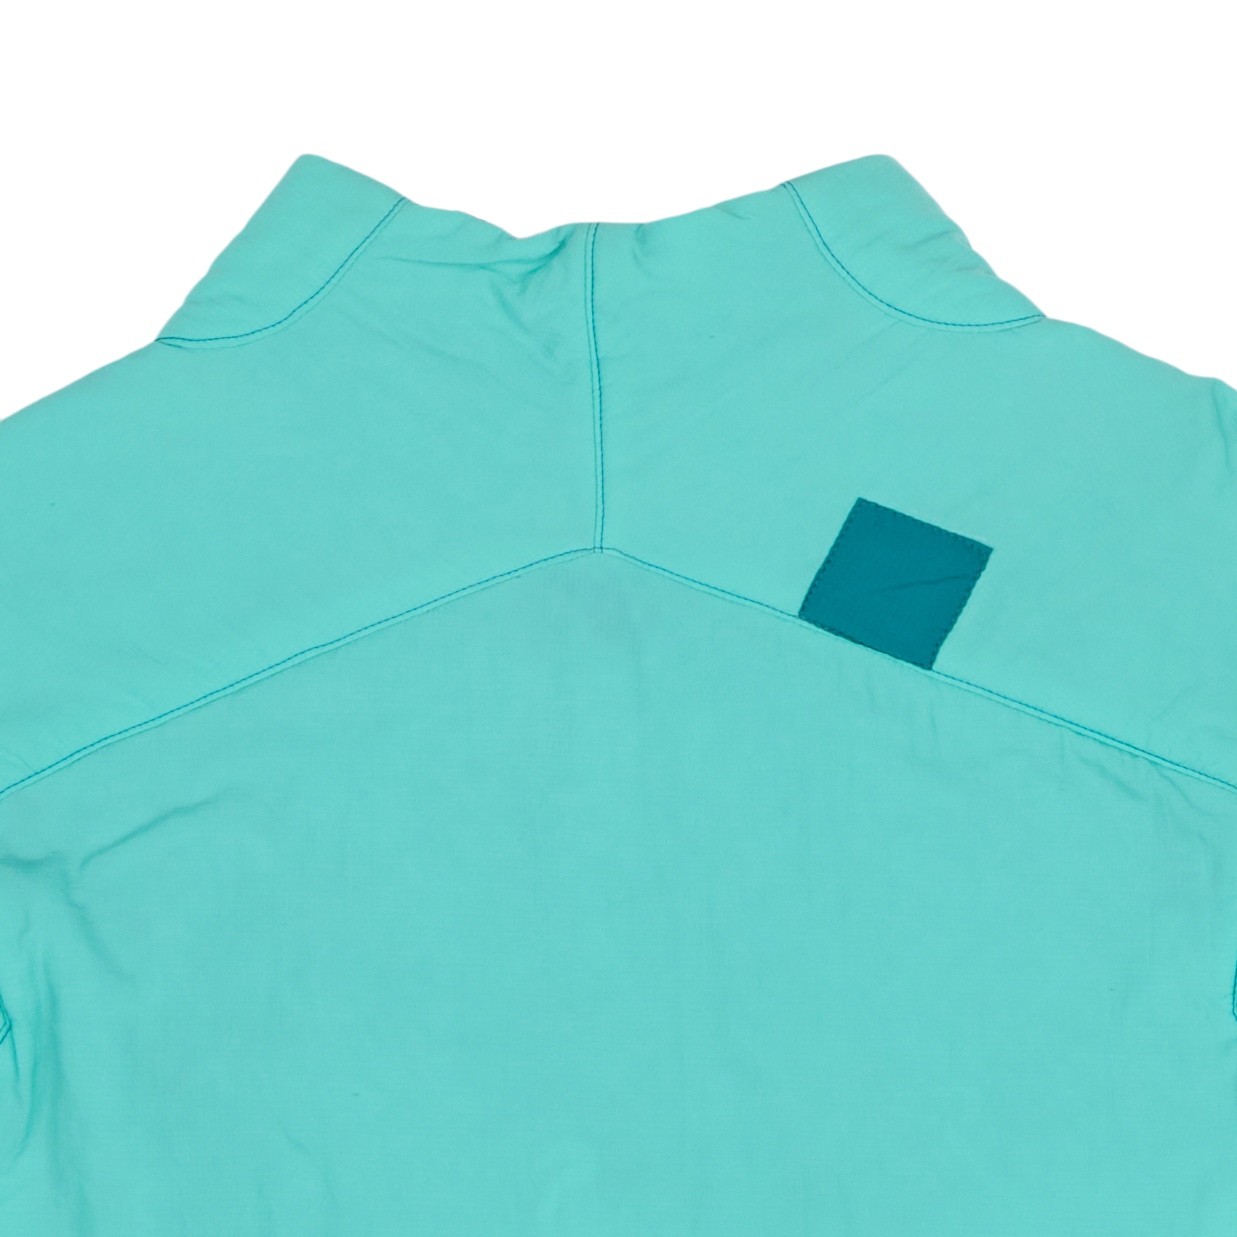 Patagonia Worn Wear Women's Nano-Air® Jacket Howling Turquoise - Used